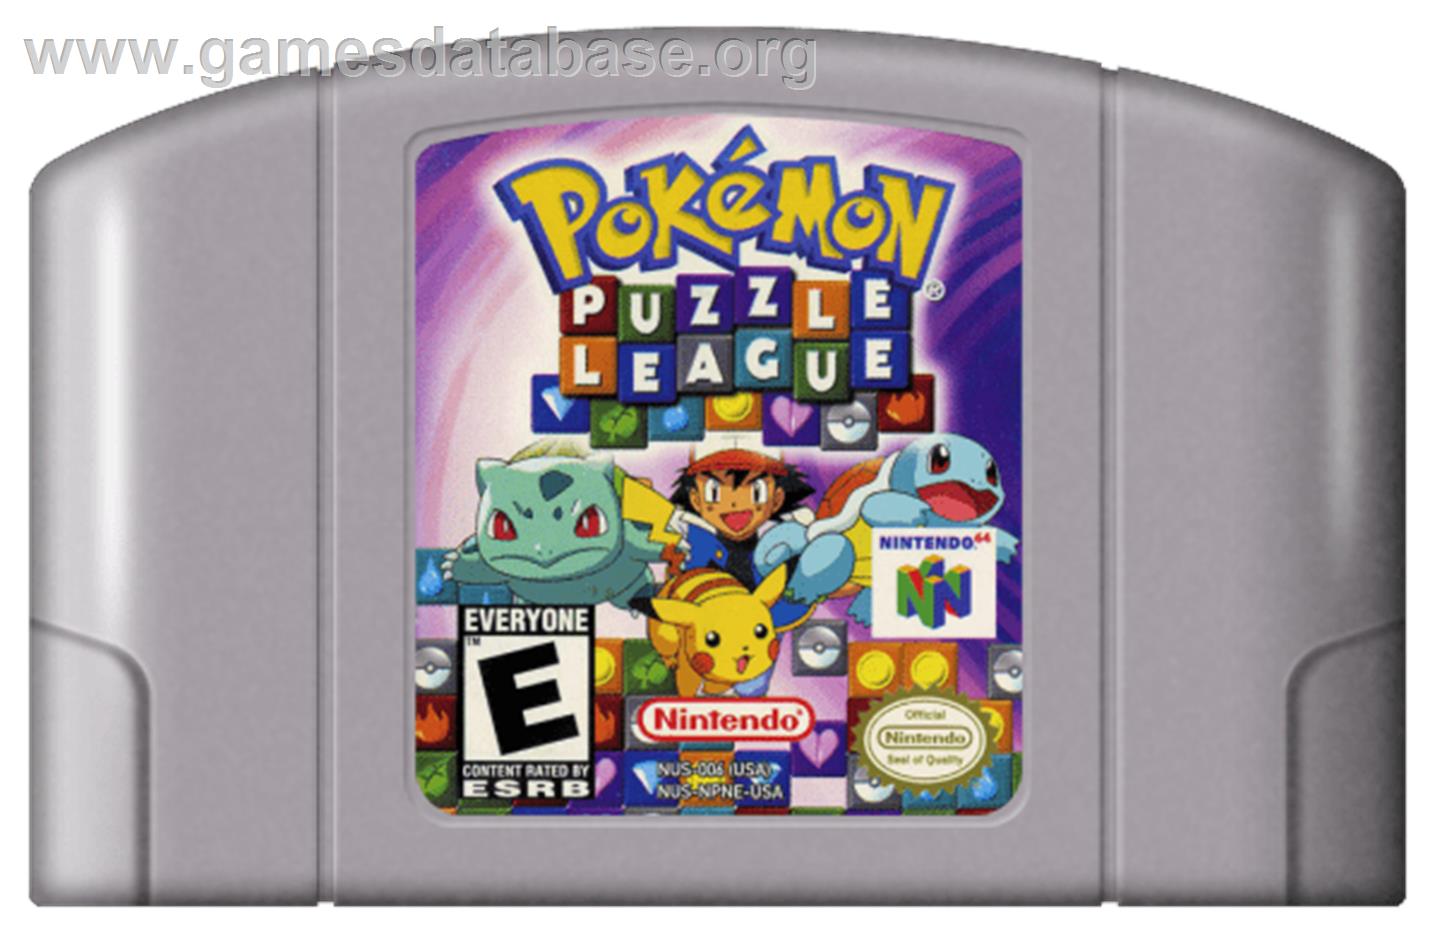 Pokemon Puzzle League - Nintendo N64 - Artwork - Cartridge